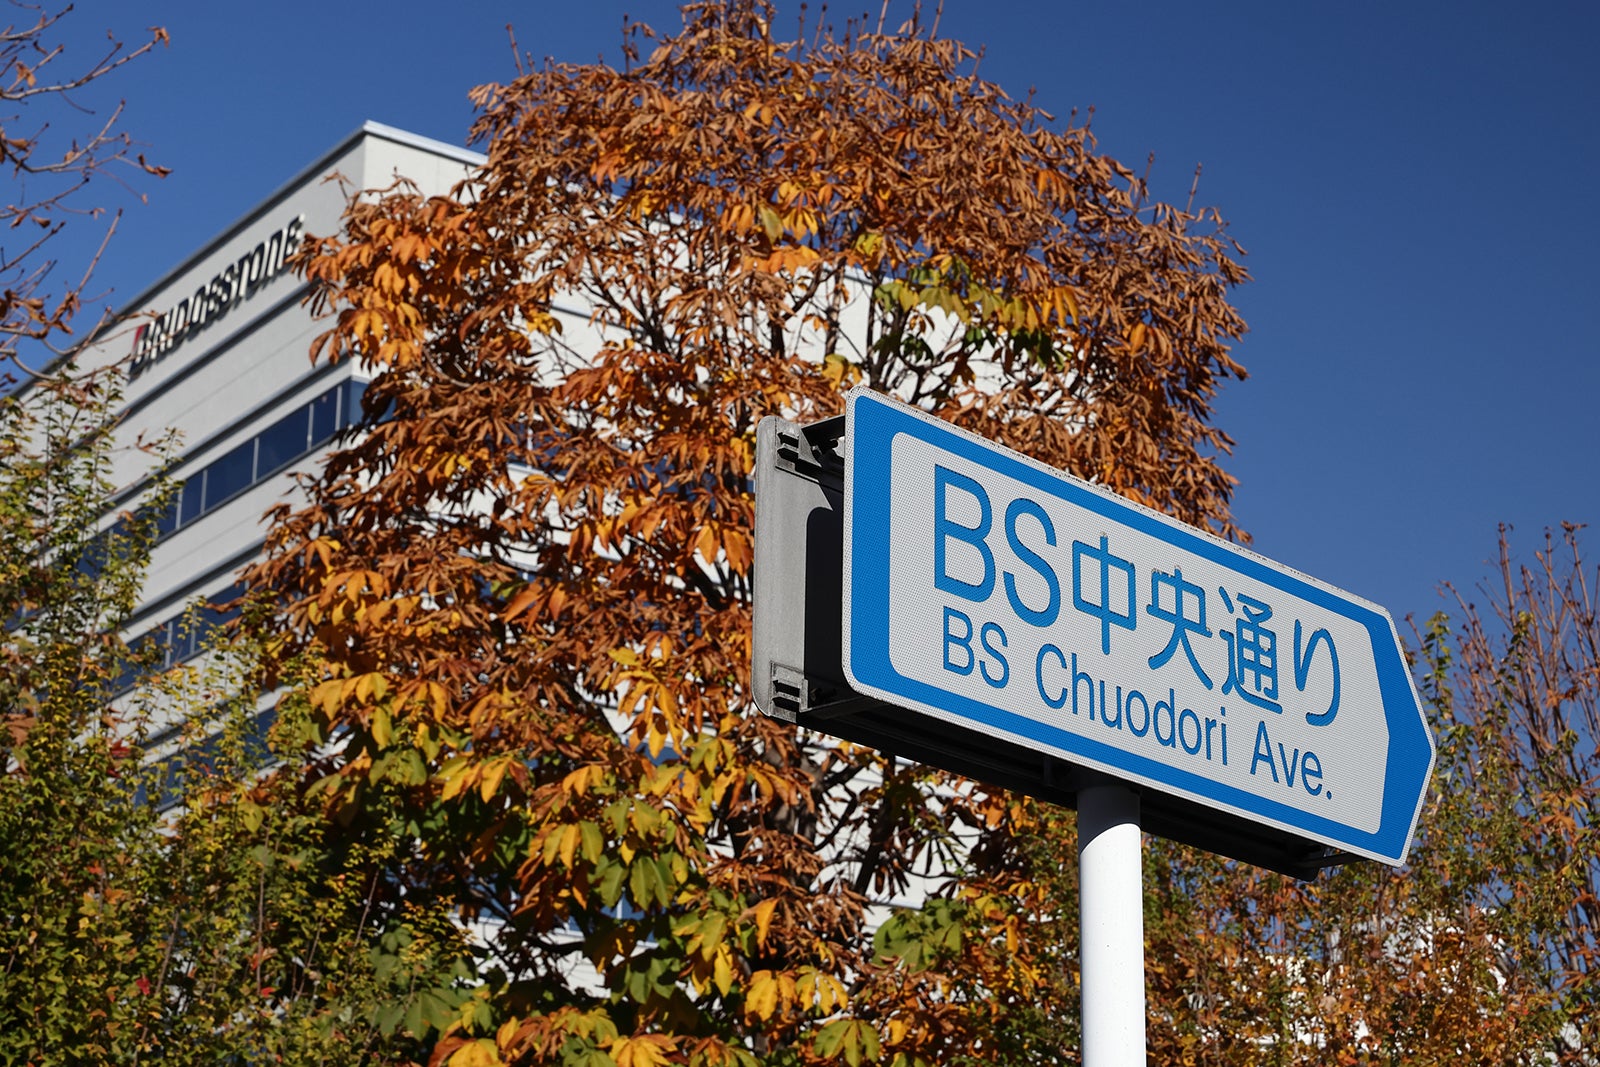 「BS中央通り」の案内標識